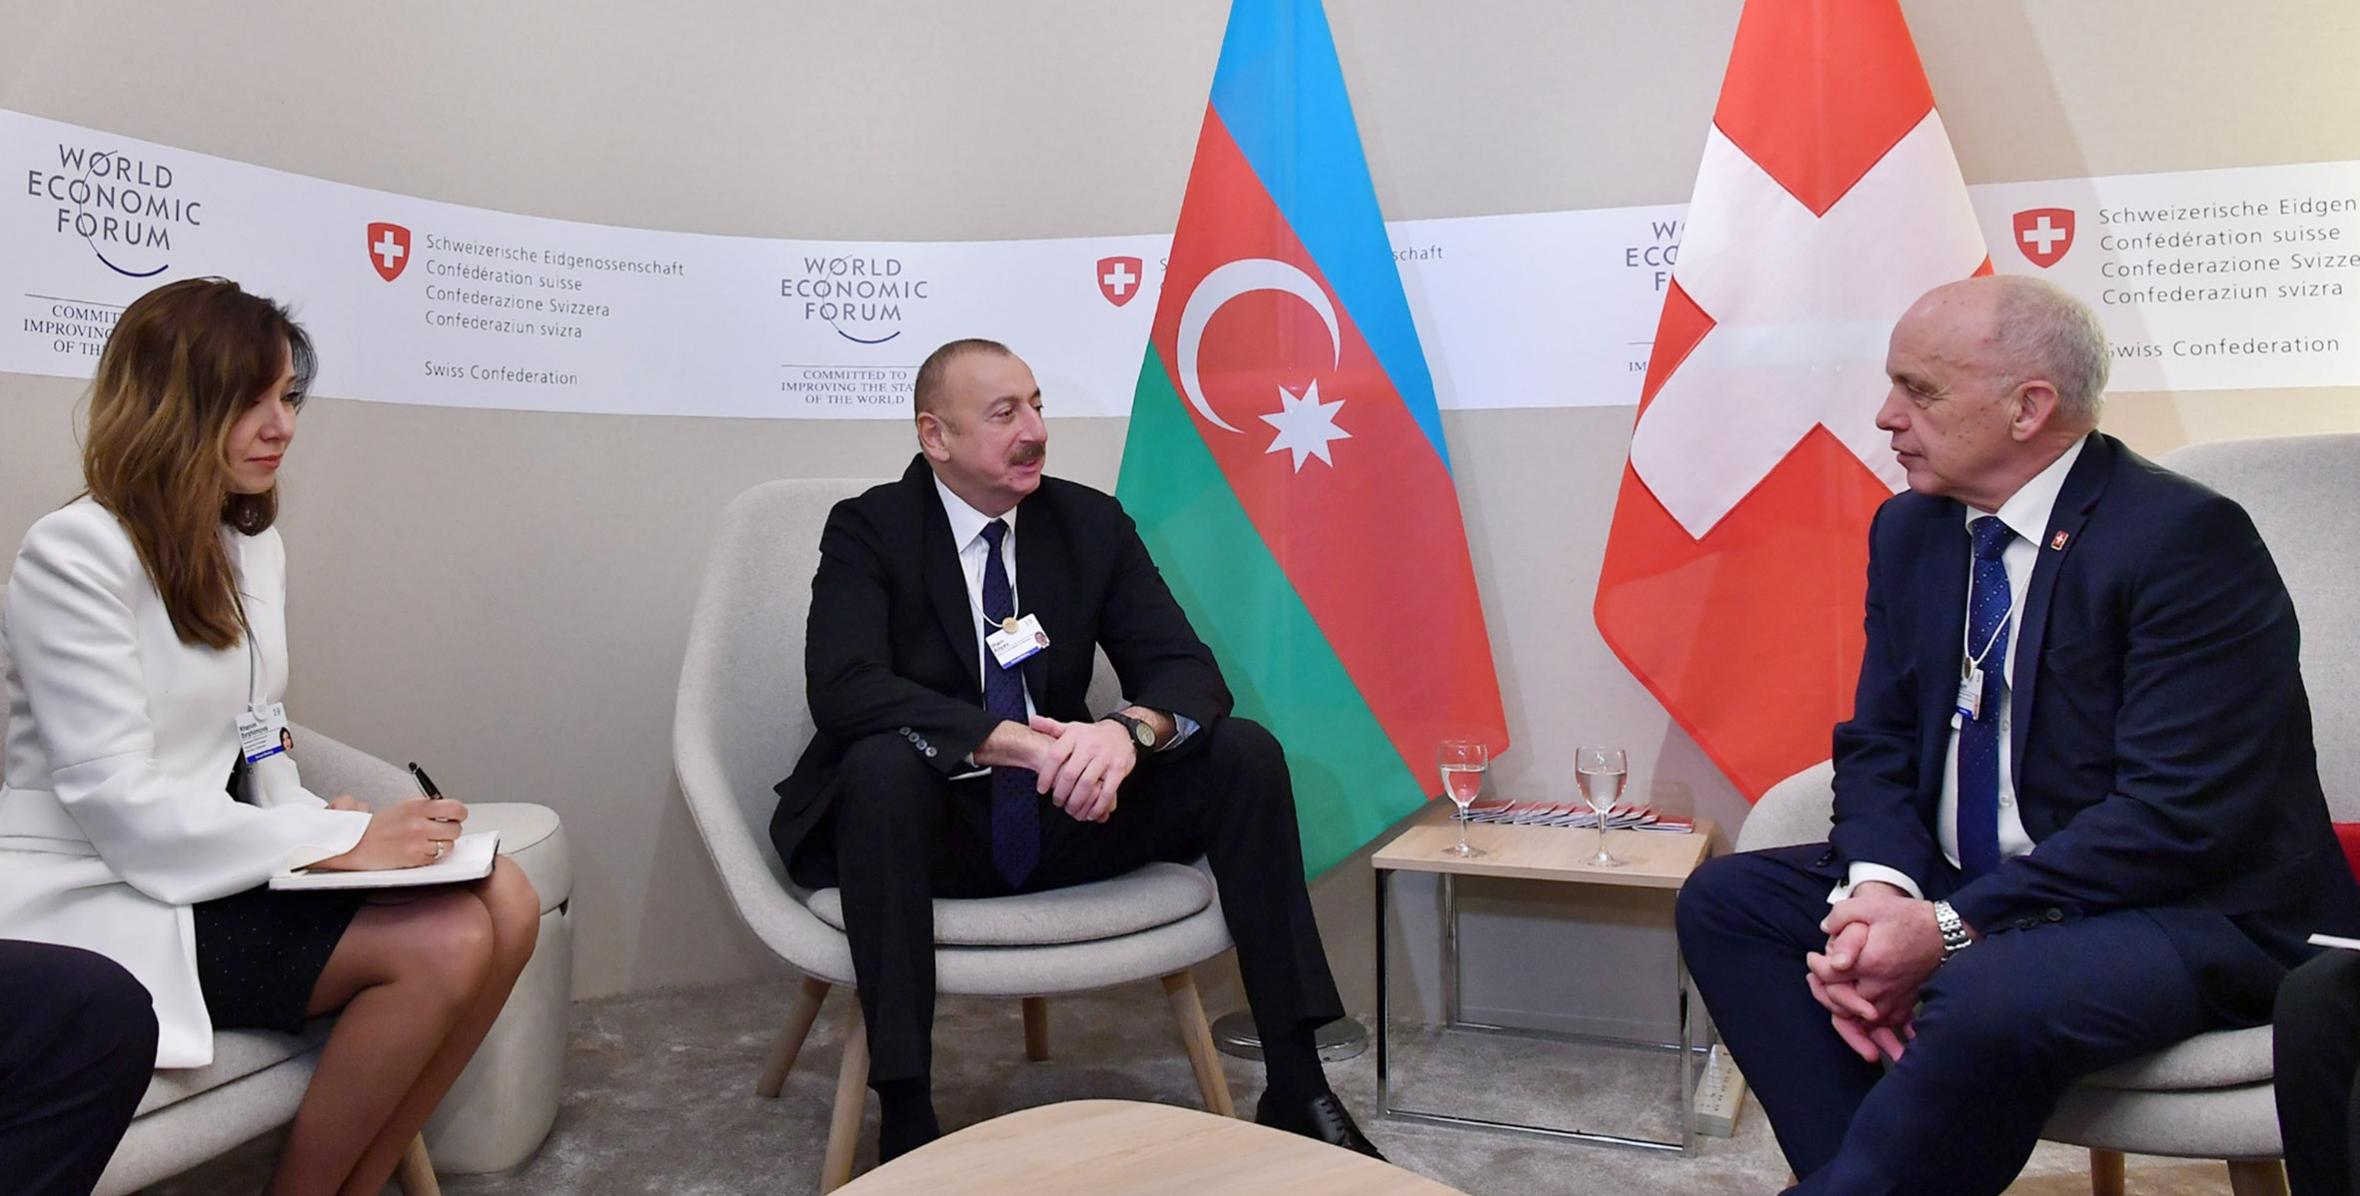 Ilham Aliyev met with Swiss President Ueli Maurer